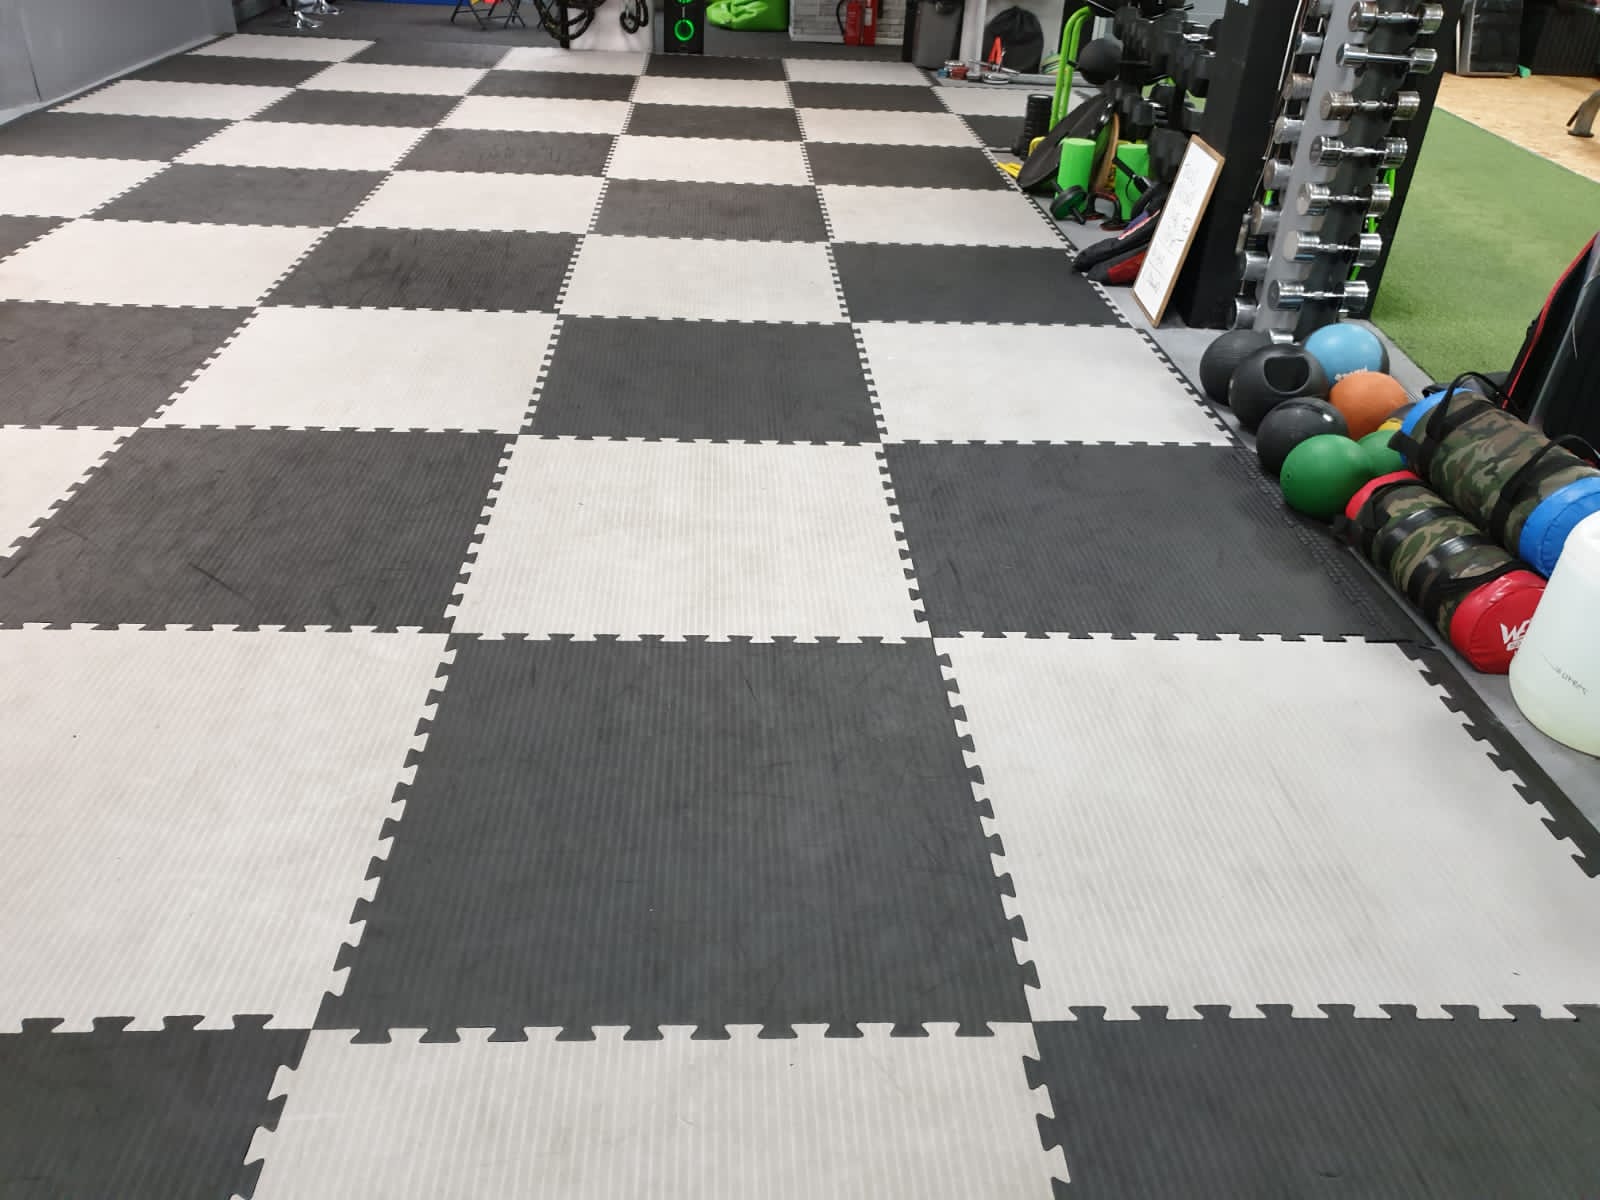 Cleaned Hard flooring in Gym